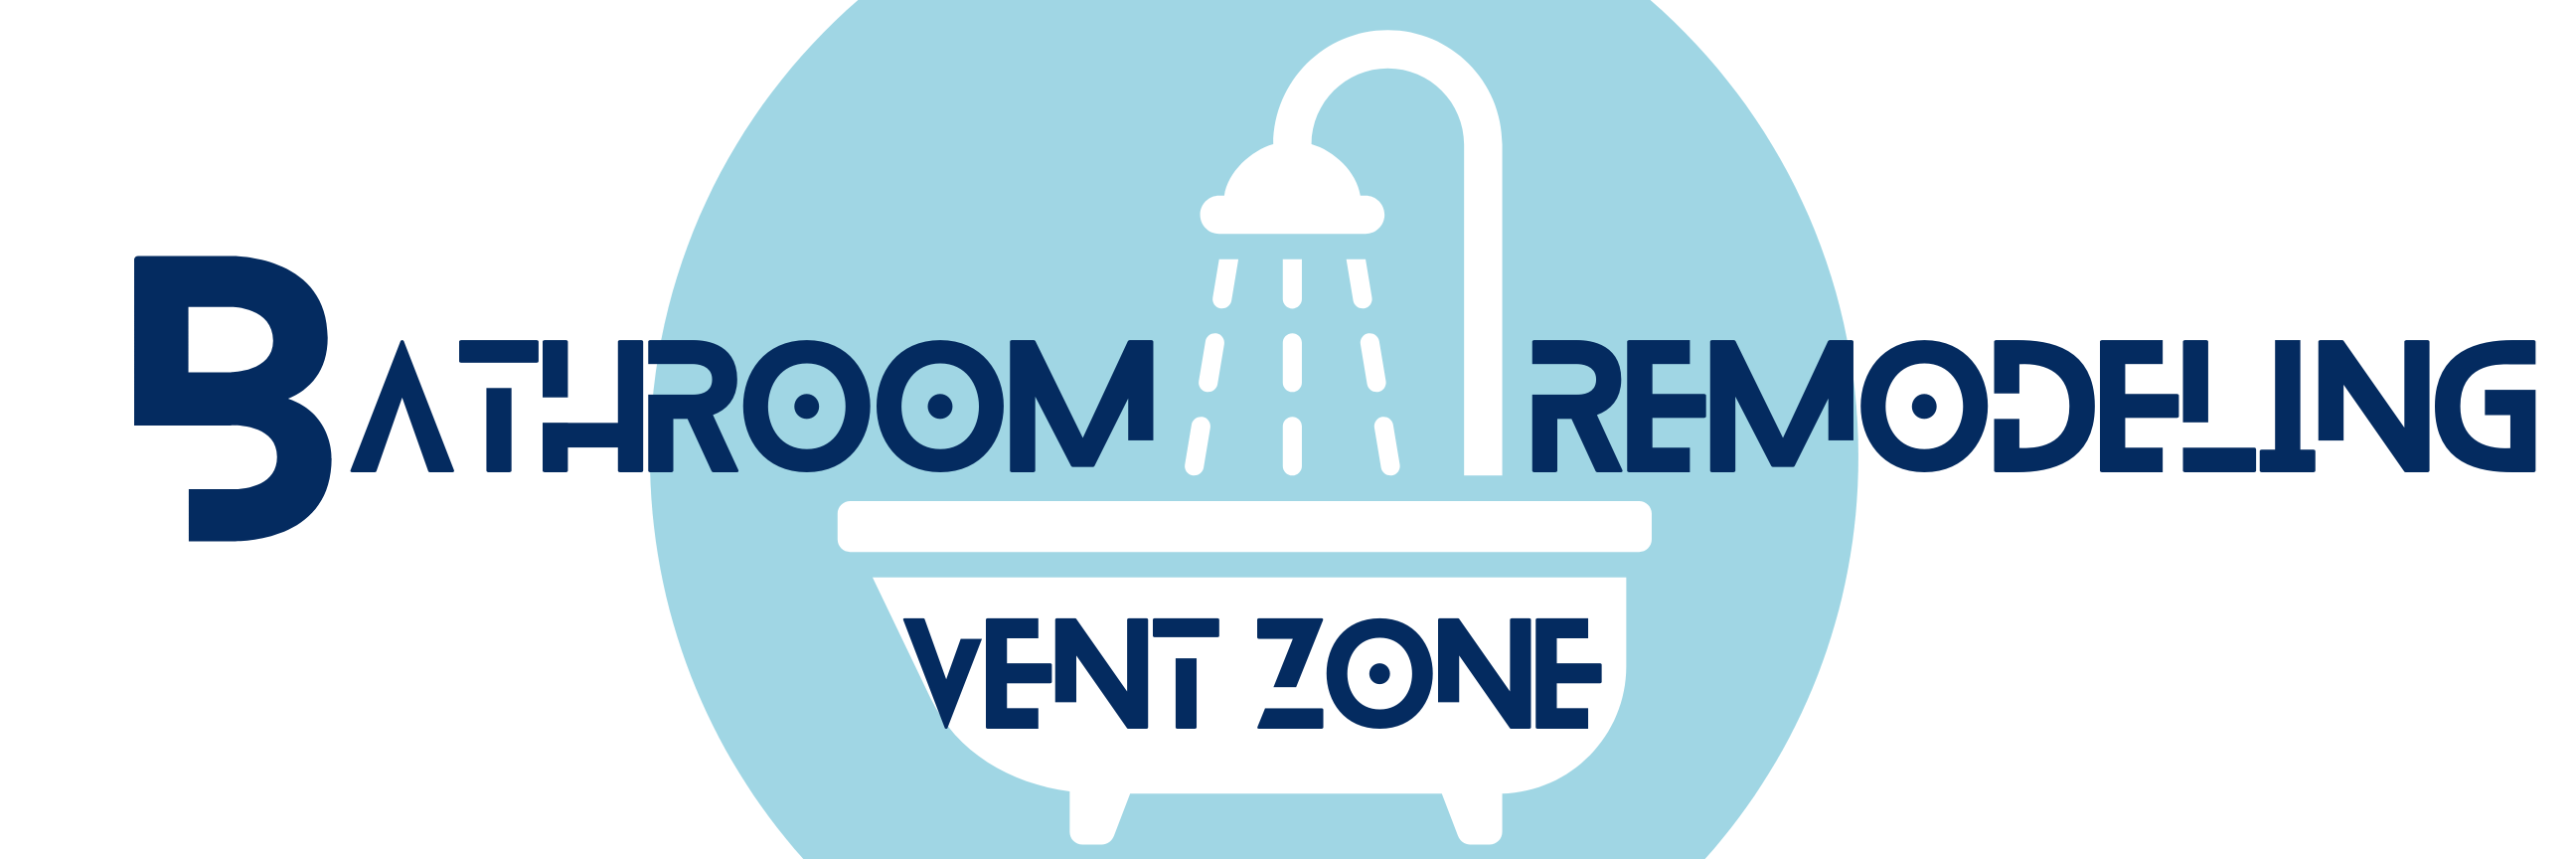 Vent Zone Bathroom Remodeling